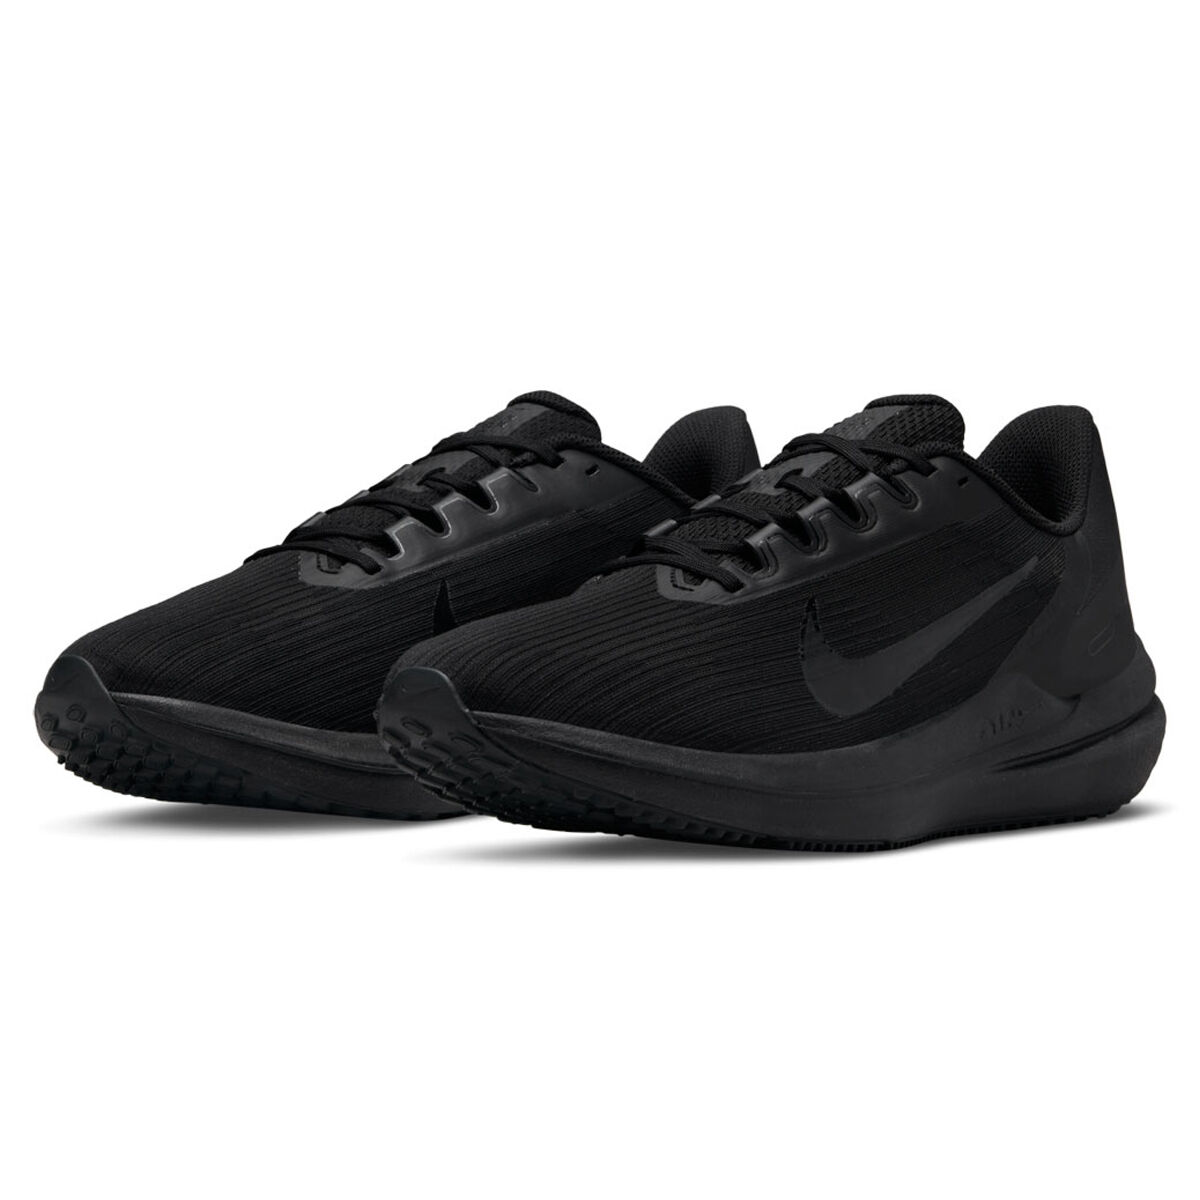 Mens Air Winflo 9 Running Shoes in Black/Black Size 8.0 Finish Line Men Sport & Swimwear Sportswear Sports Shoes Running 